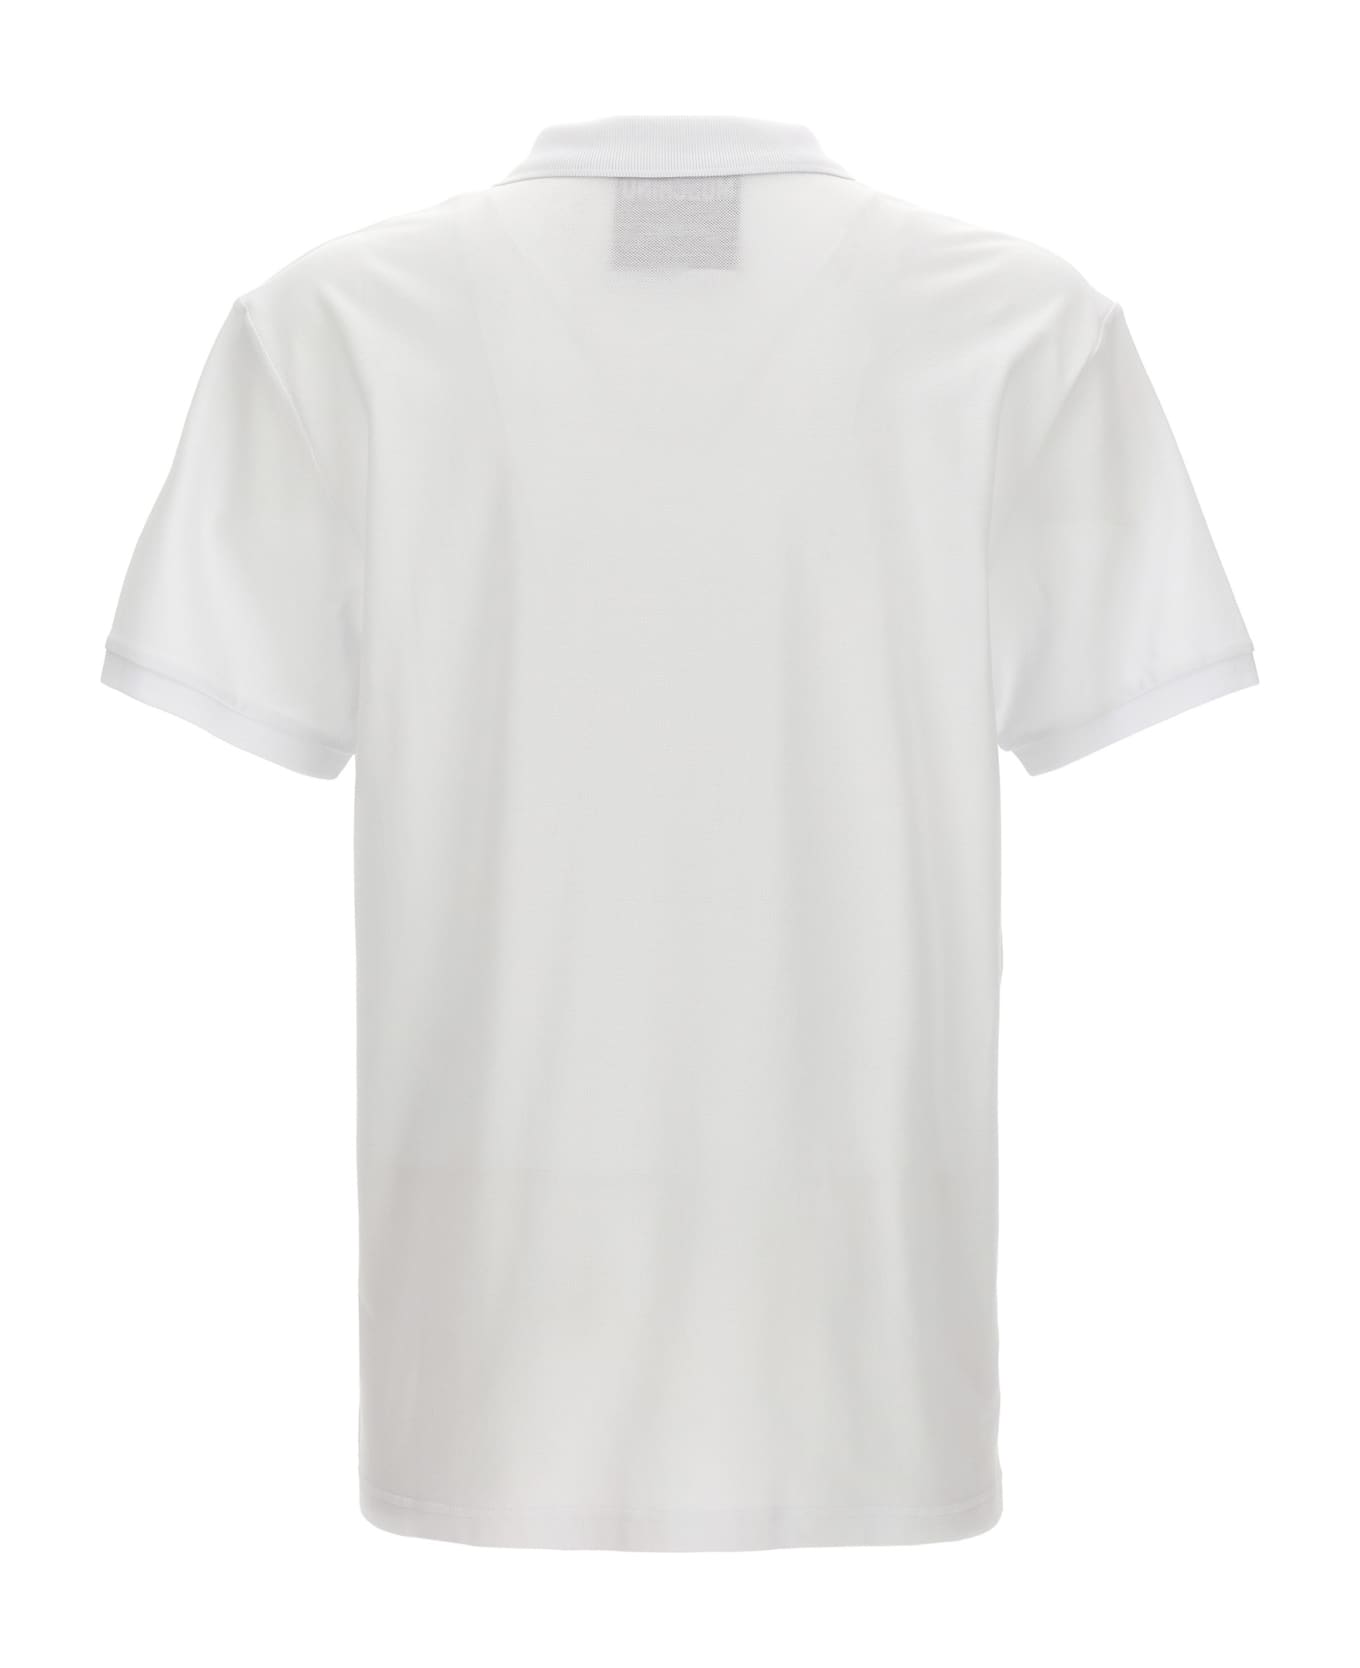 Moschino 'in Love We Trust' Polo Shirt - White